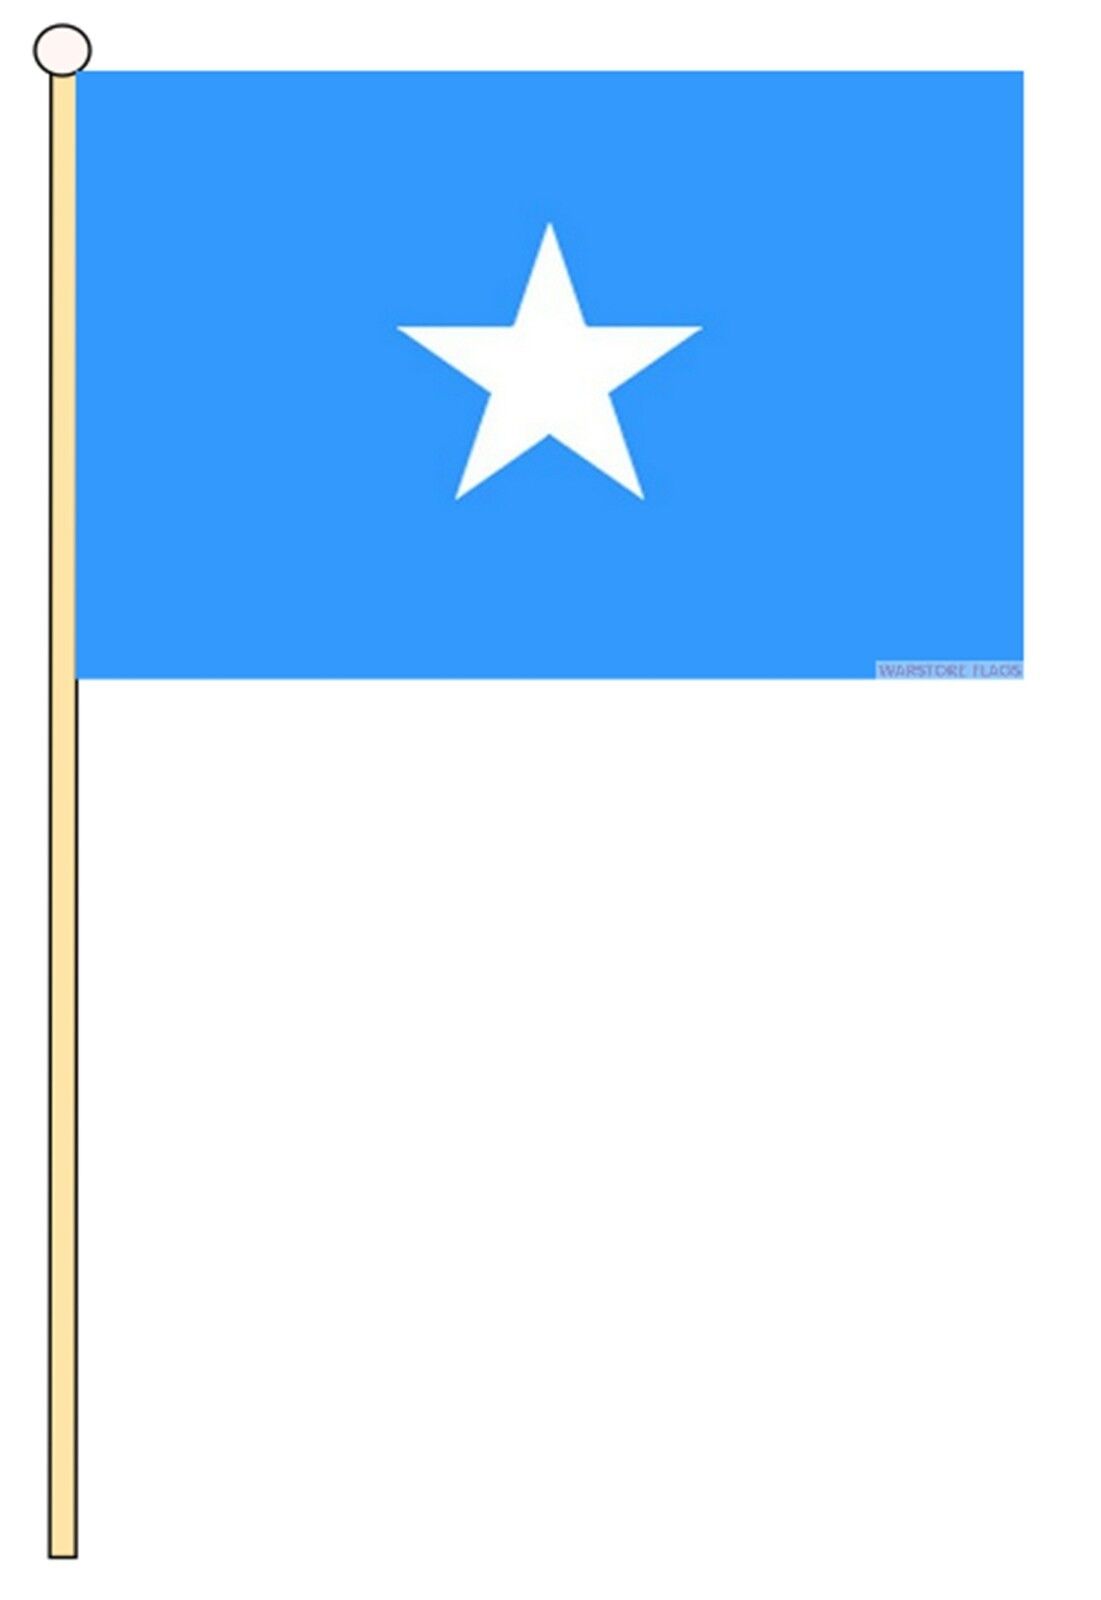 SOMALIA AFRICA 18